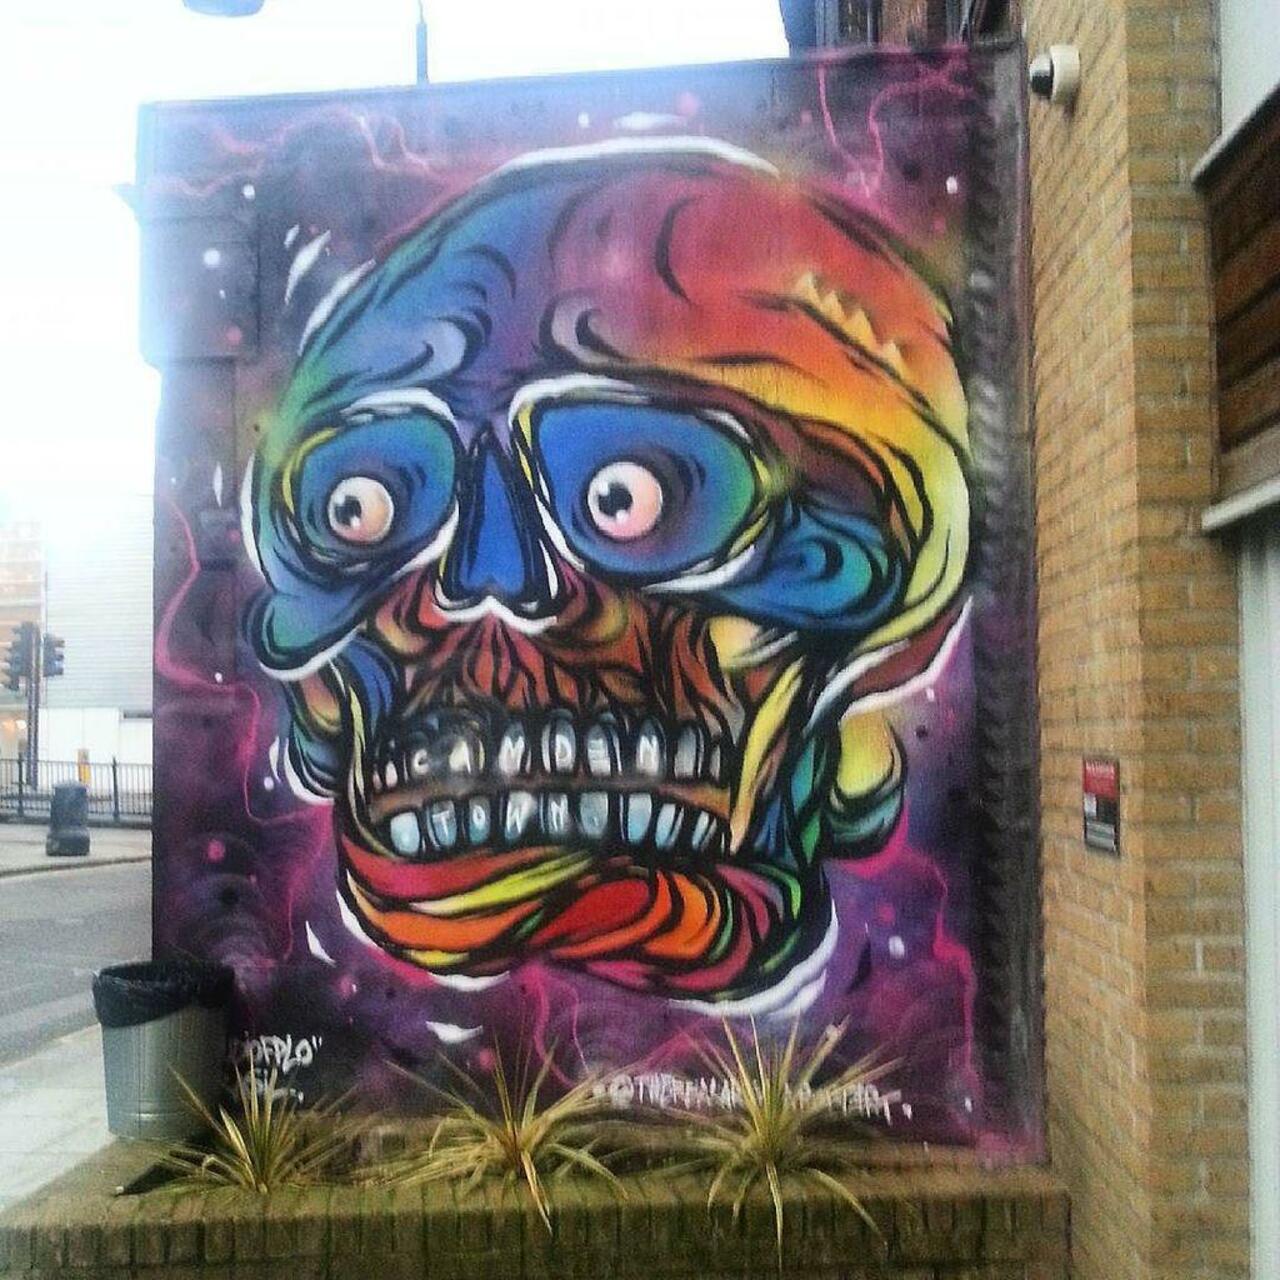 StArtEverywhere: Art by FpLo  
#Graffiti #StreetArt #UrbanArt #FPLO #KentishTownRoad #Camden #London #GalaxyS3 #t… http://t.co/yev9Nqa7Li